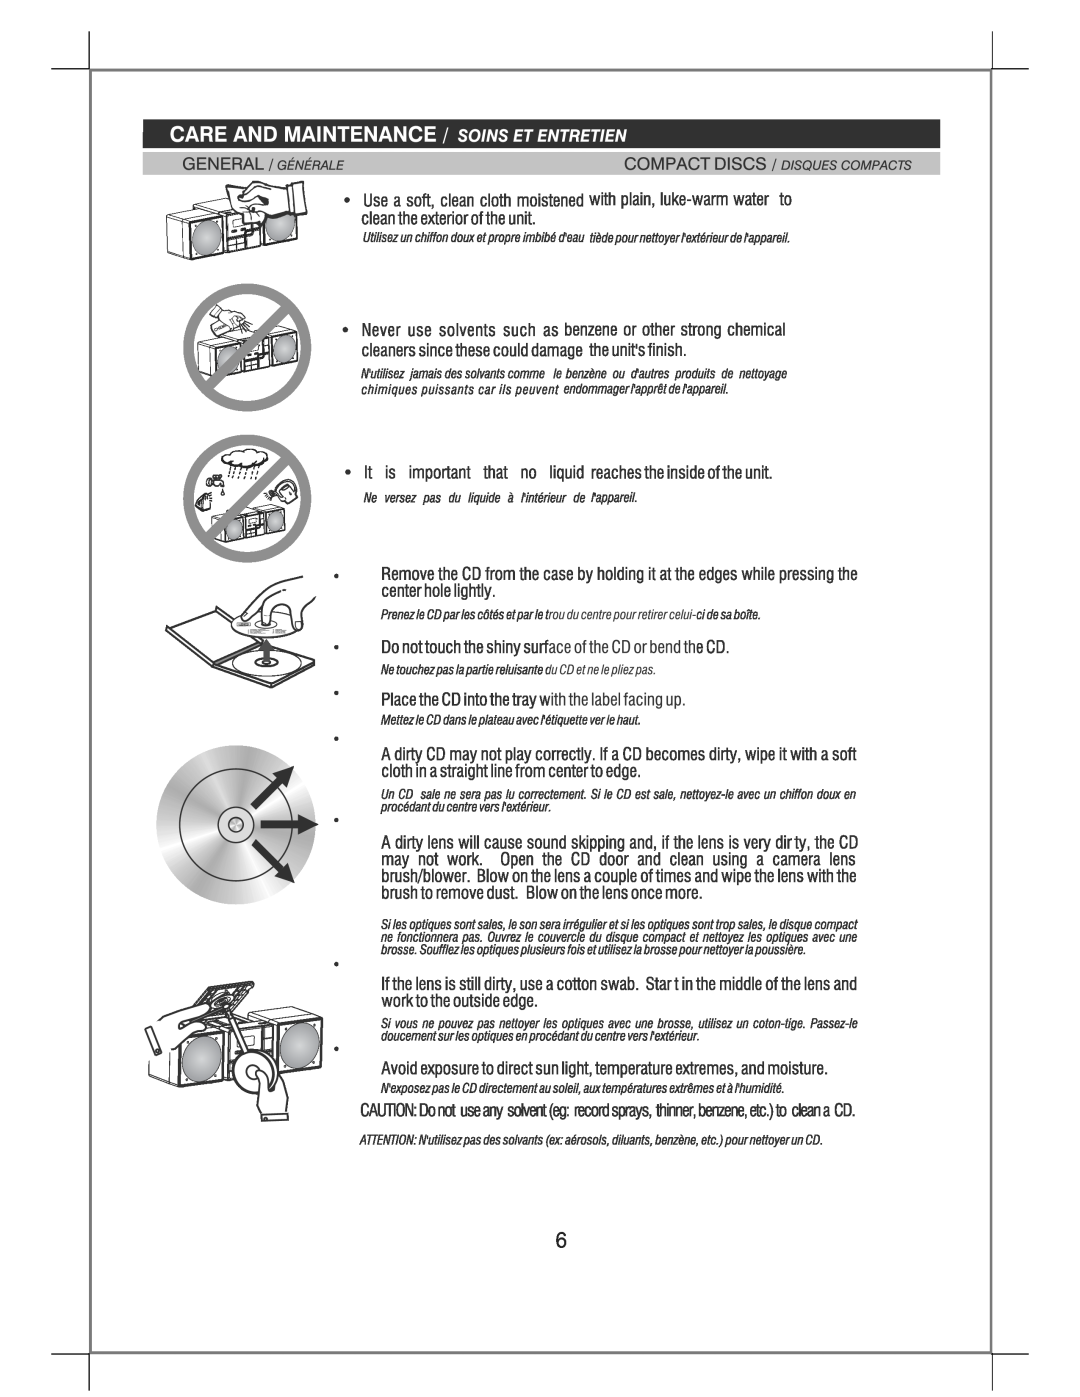 Sylvania SRCD846 manual 